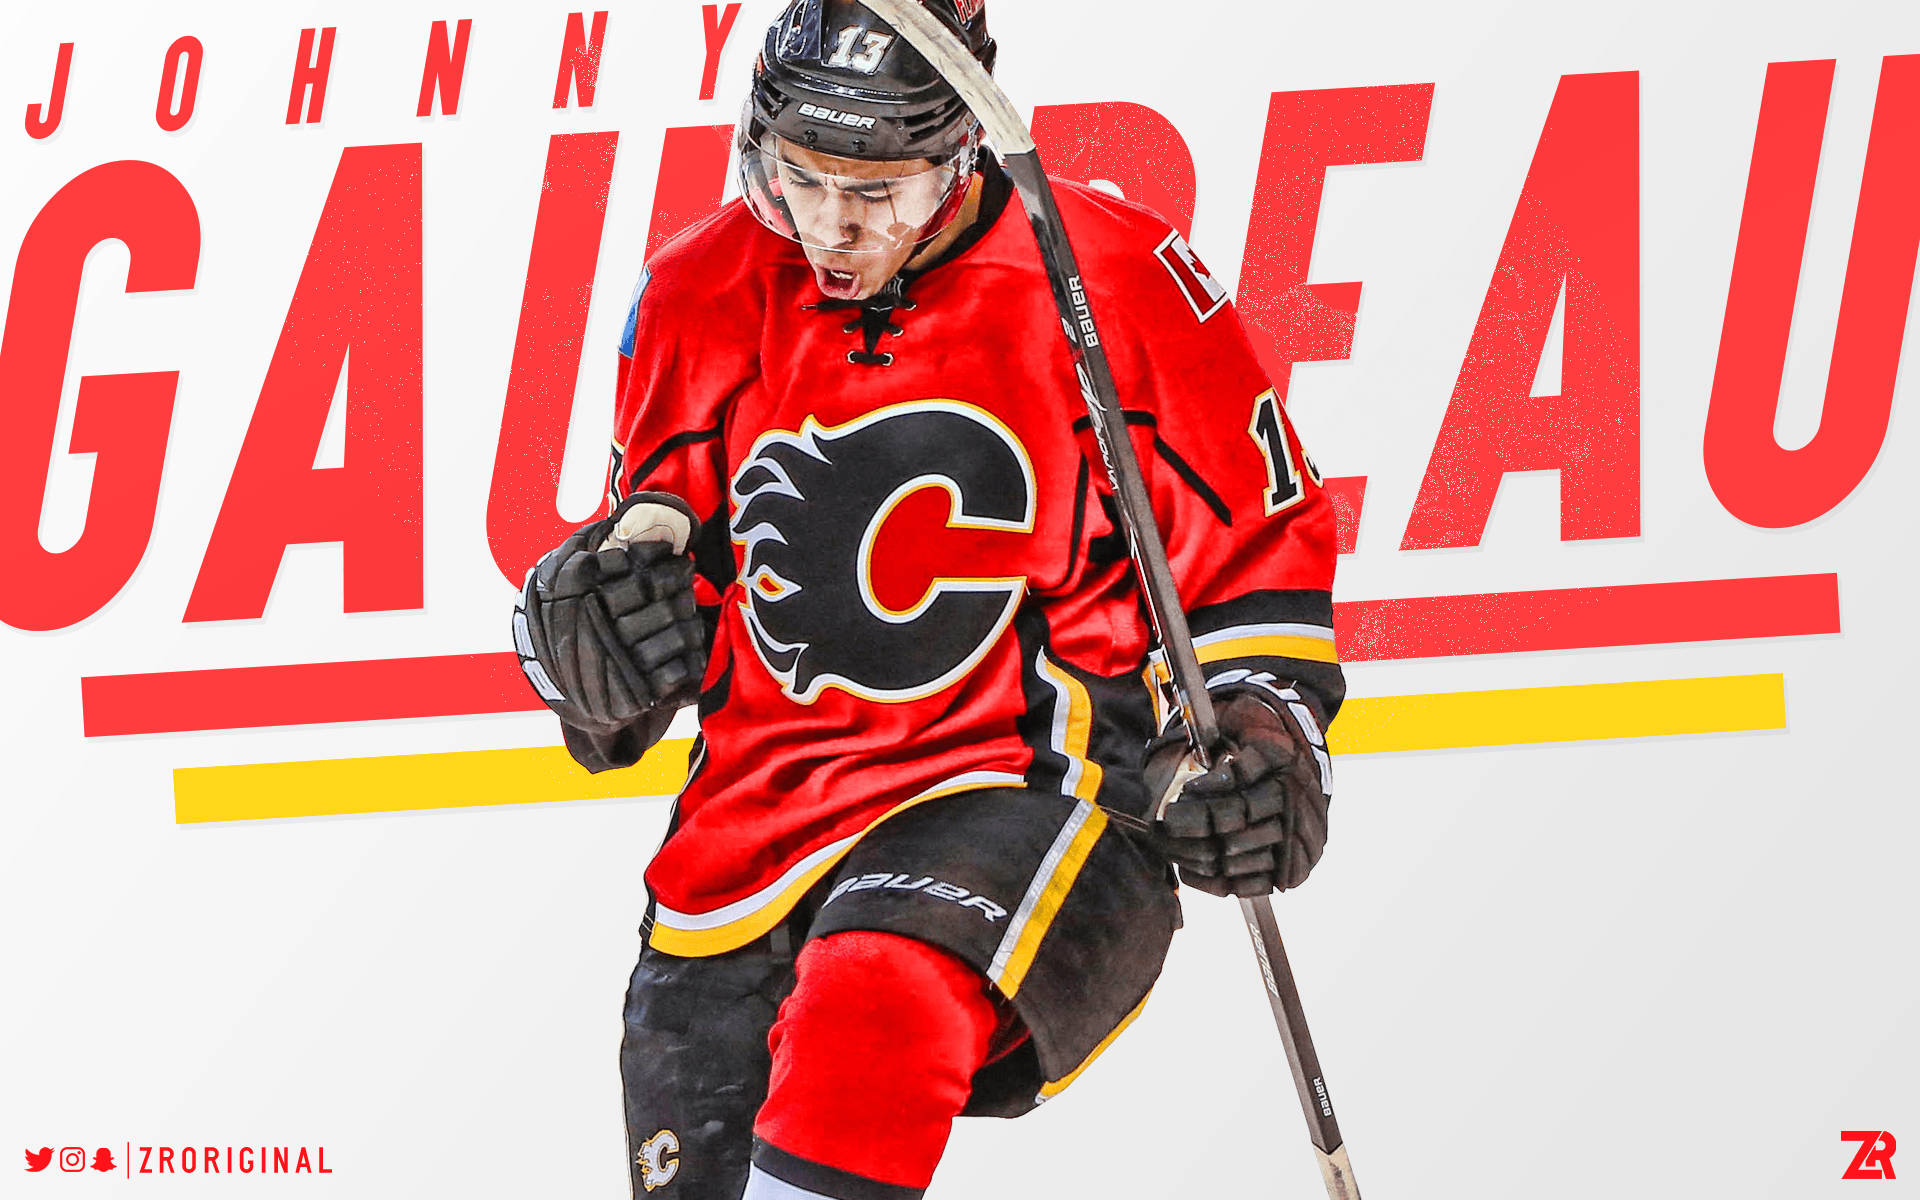 Johnnygaudreau, Hockey Su Ghiaccio Per I Calgary Flames. Sfondo